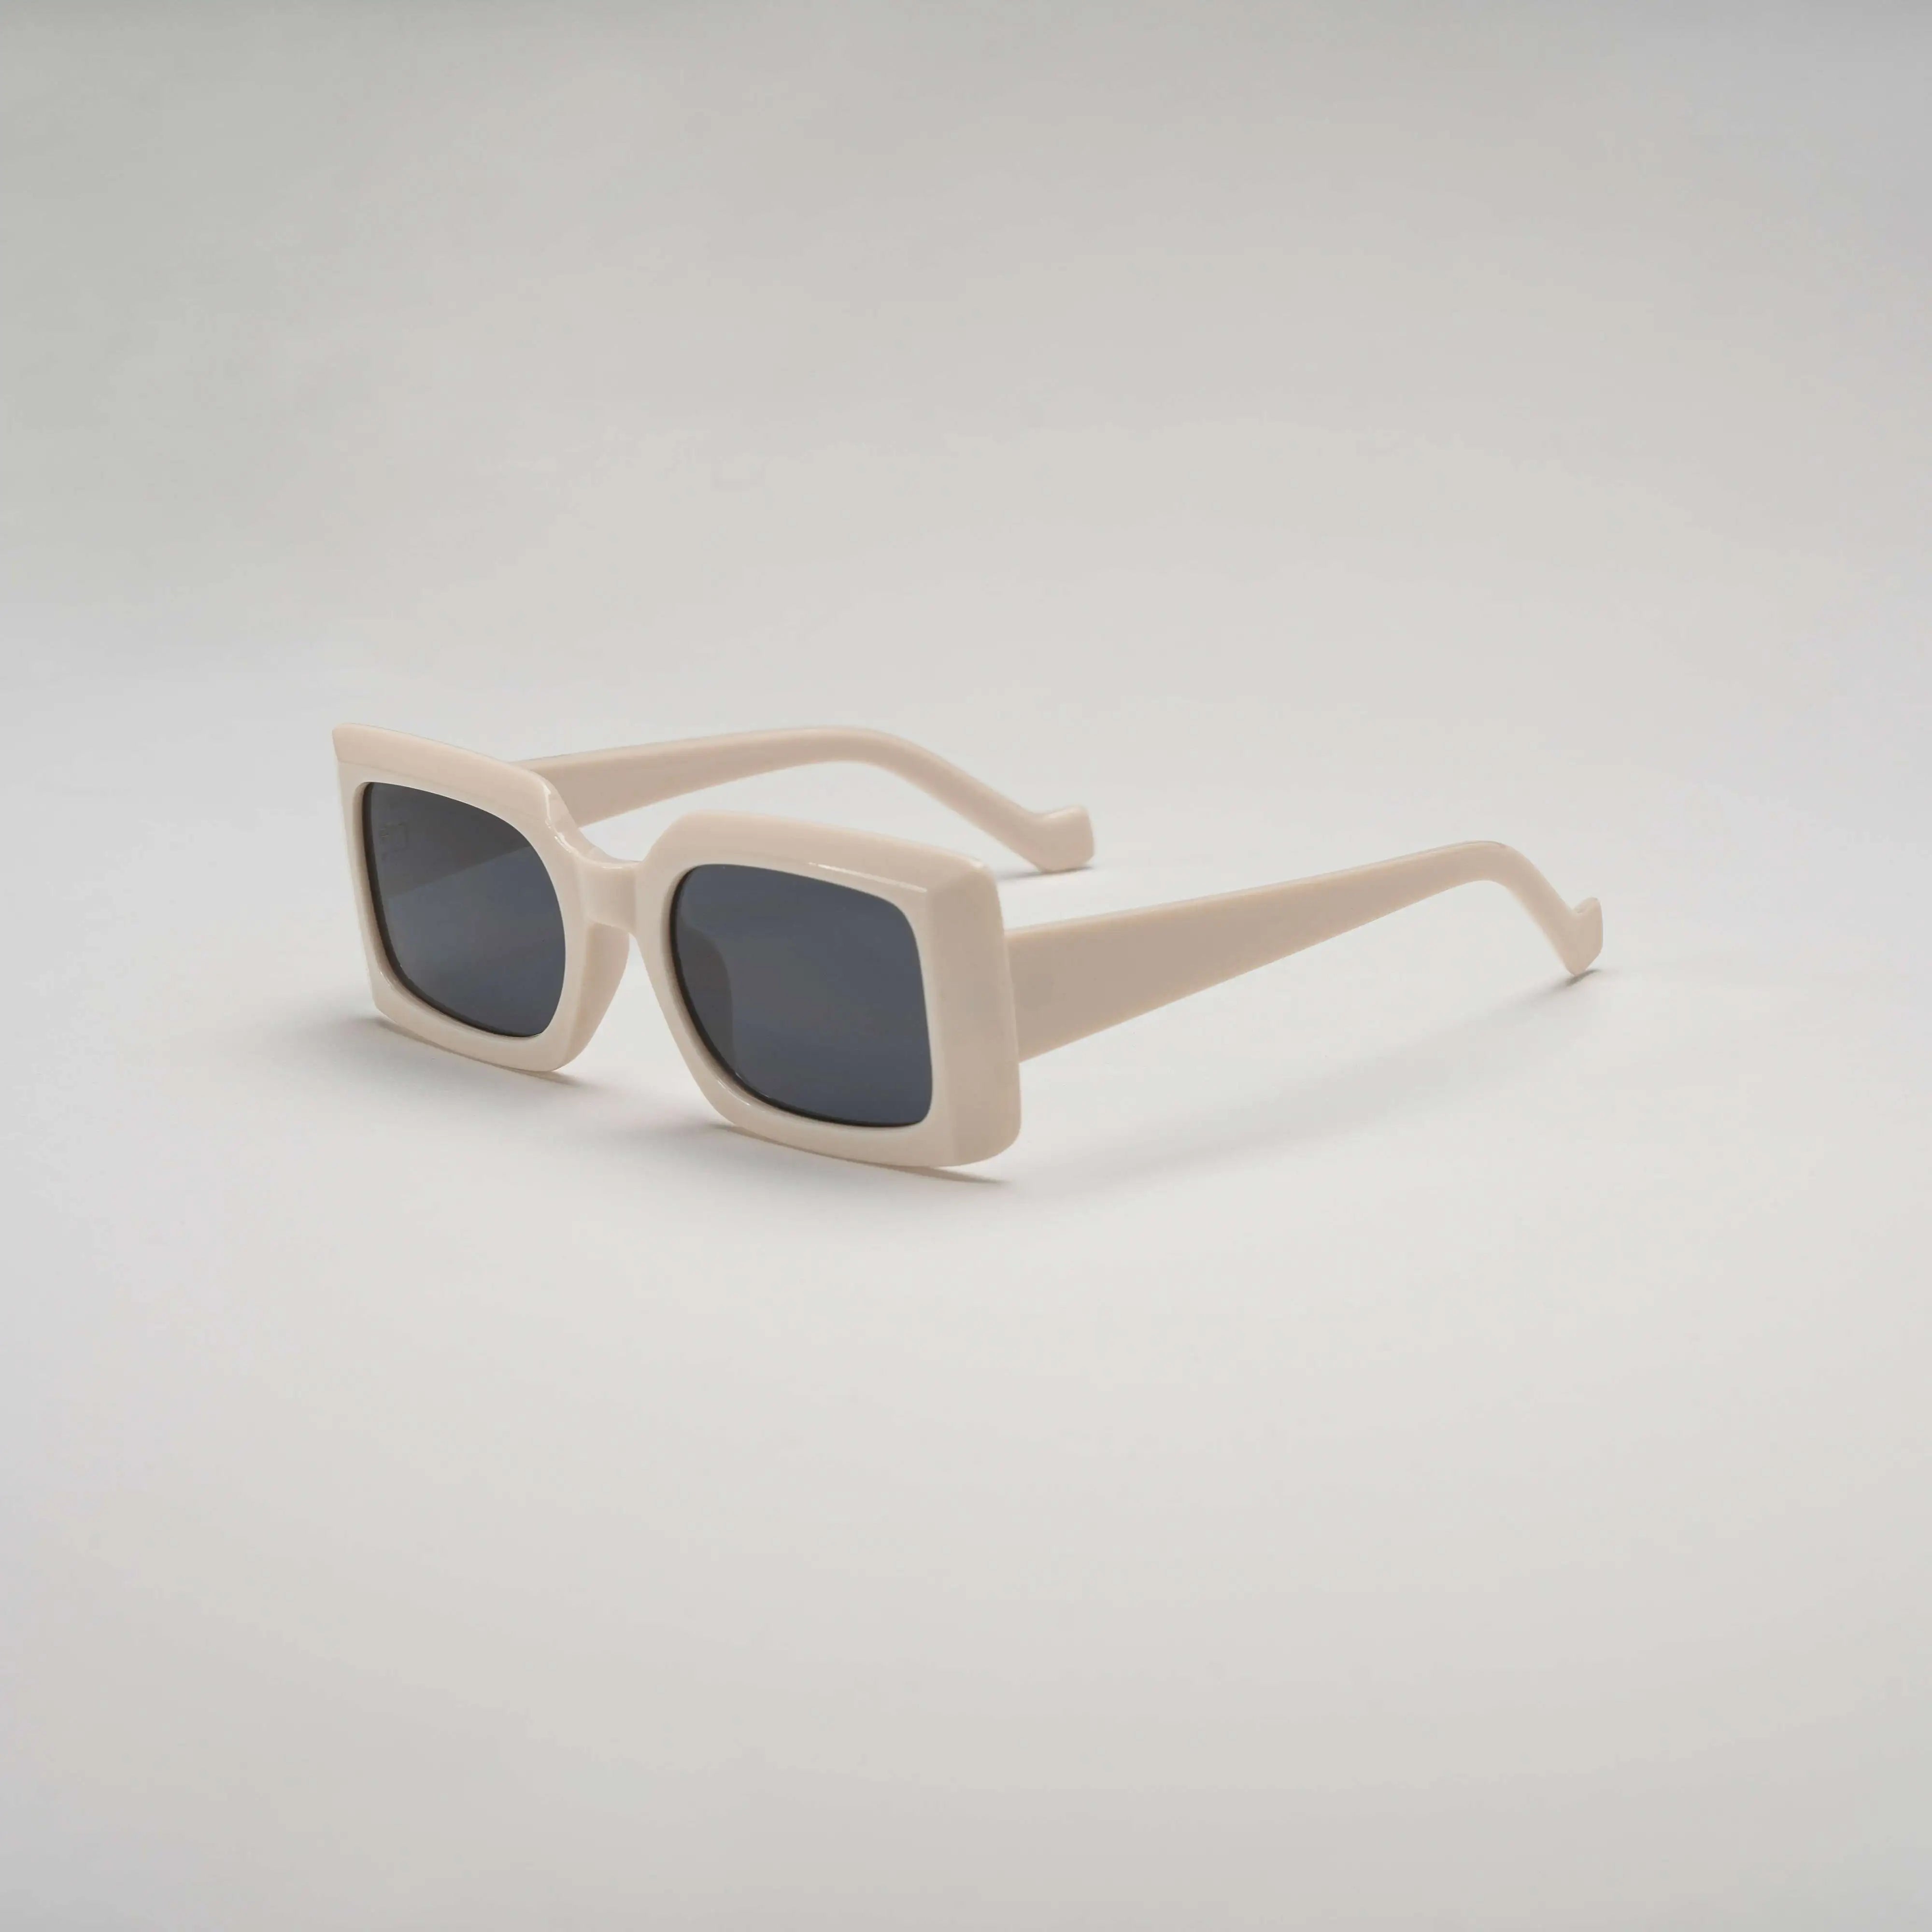 'Rabbit Hole' Retro Square Sunglasses in Beige